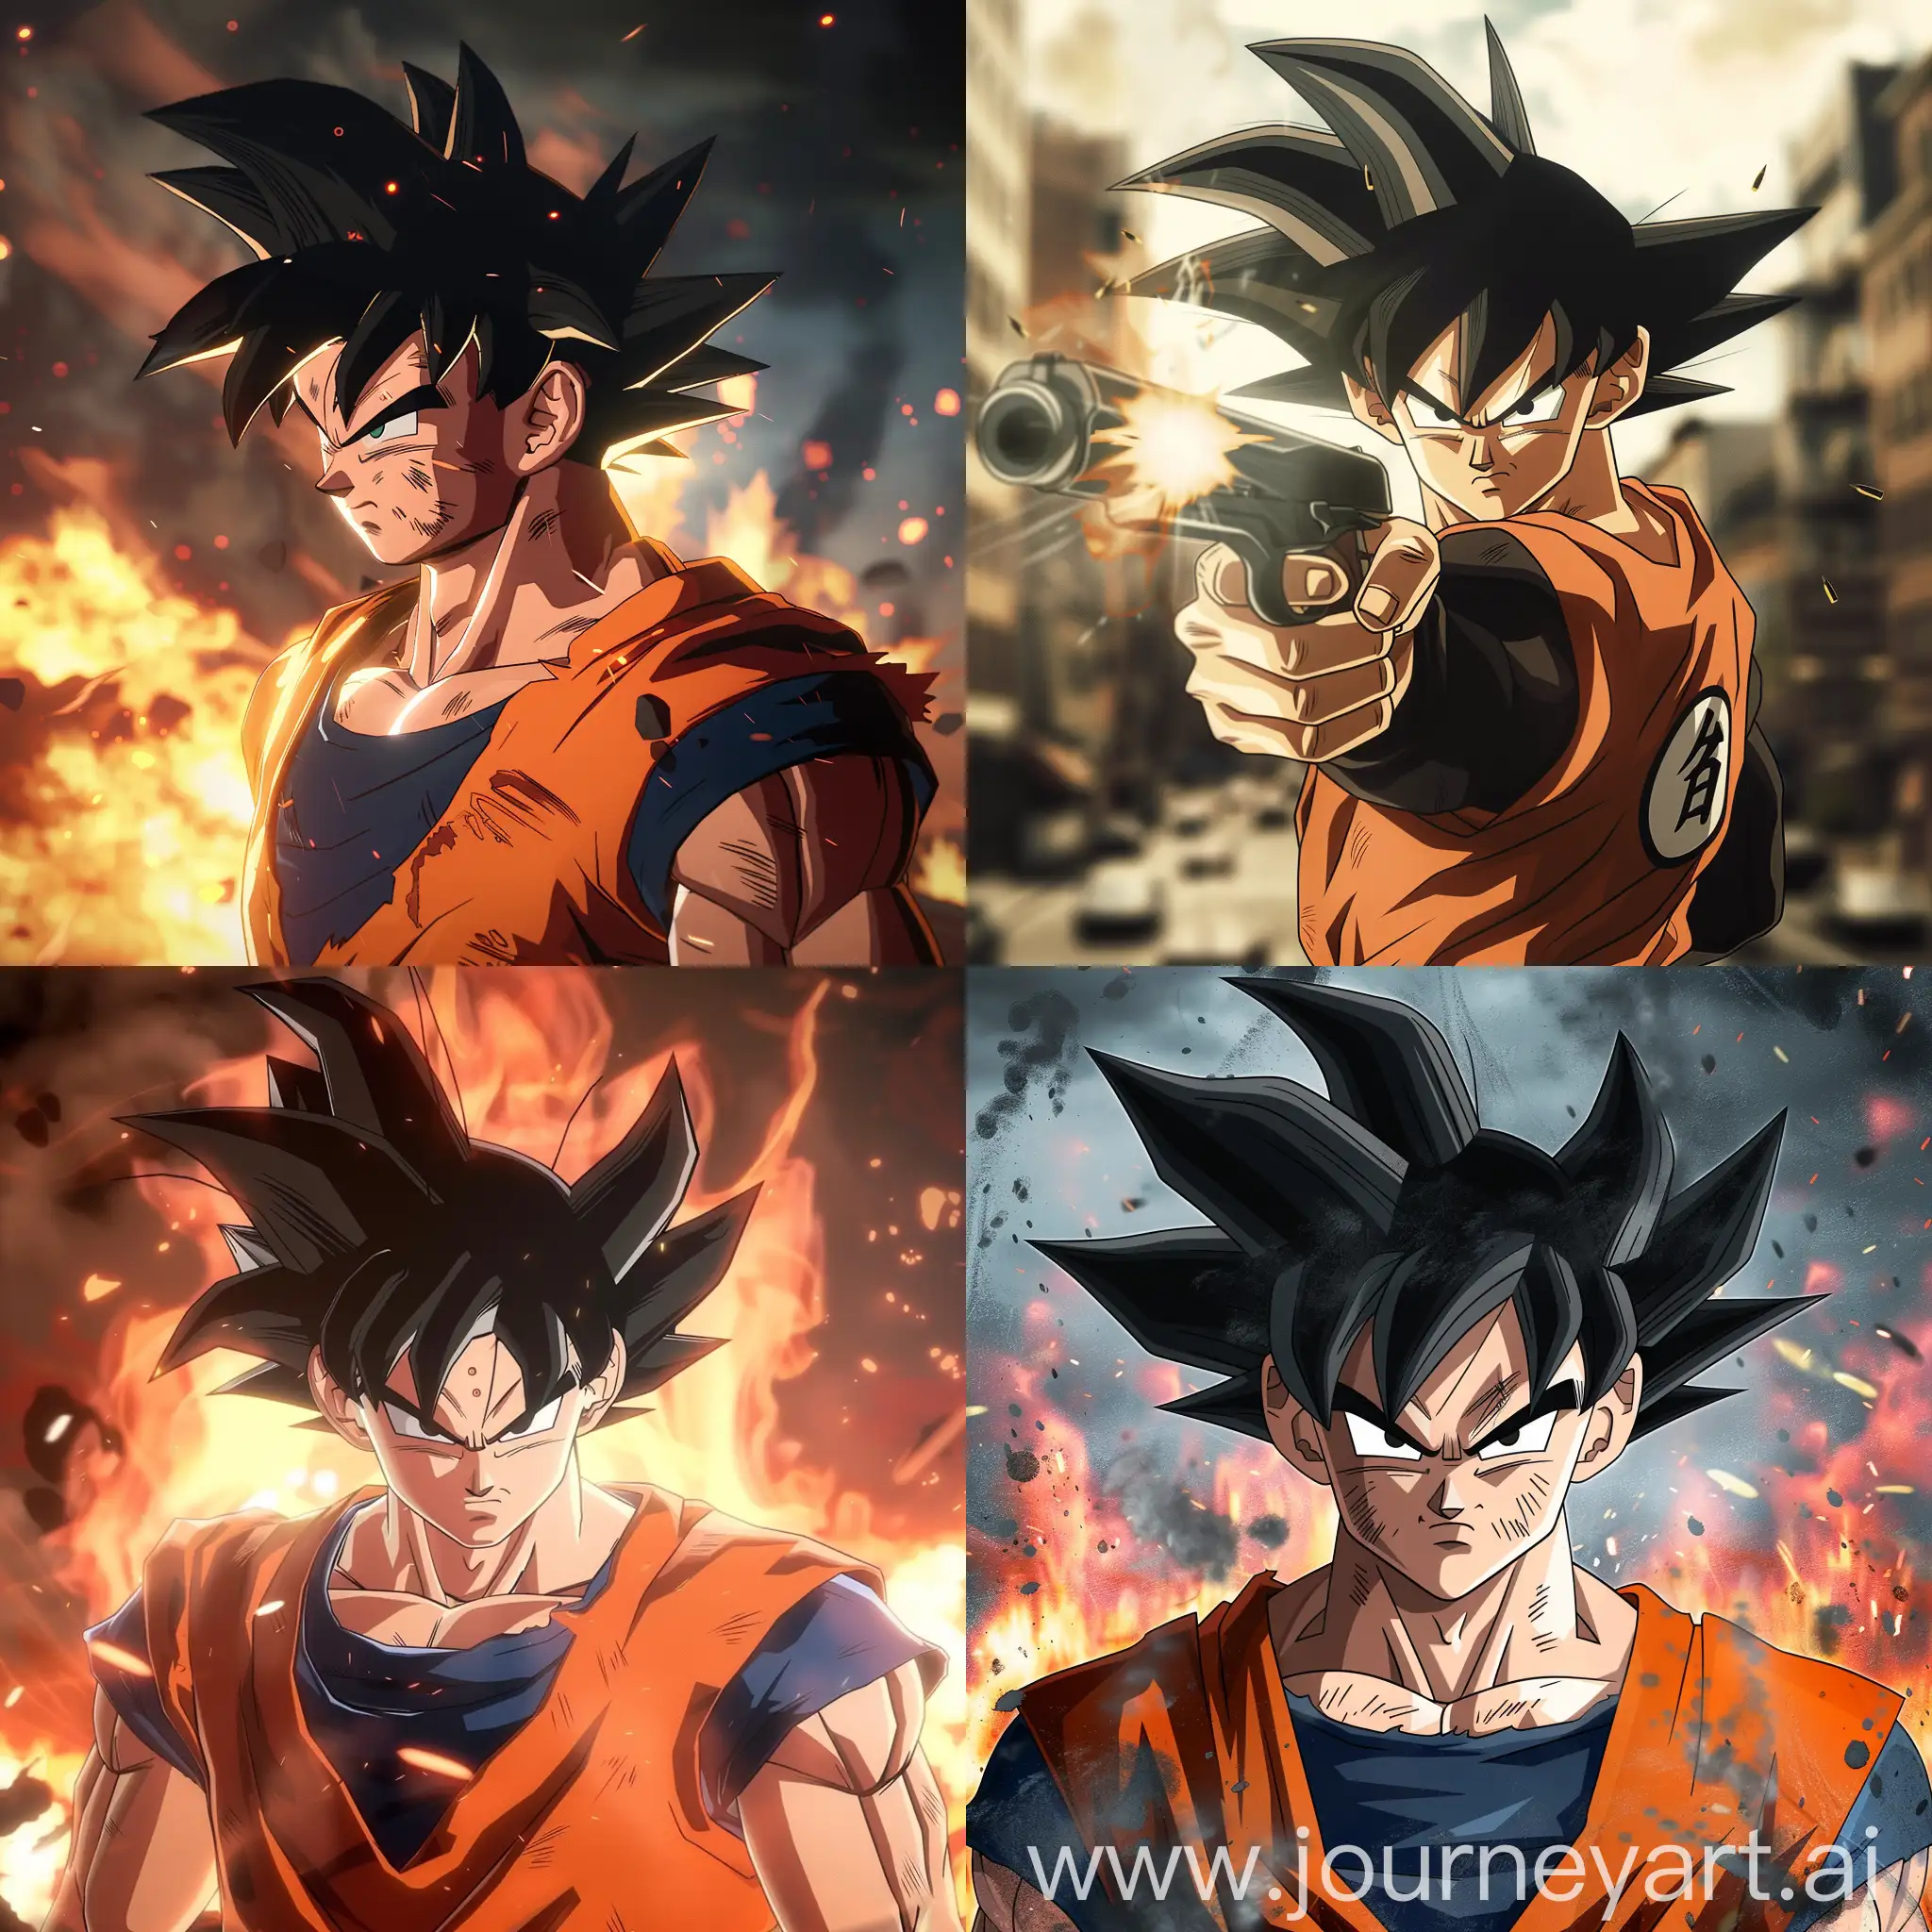 Goku-Battling-in-Free-Fire-Video-Game